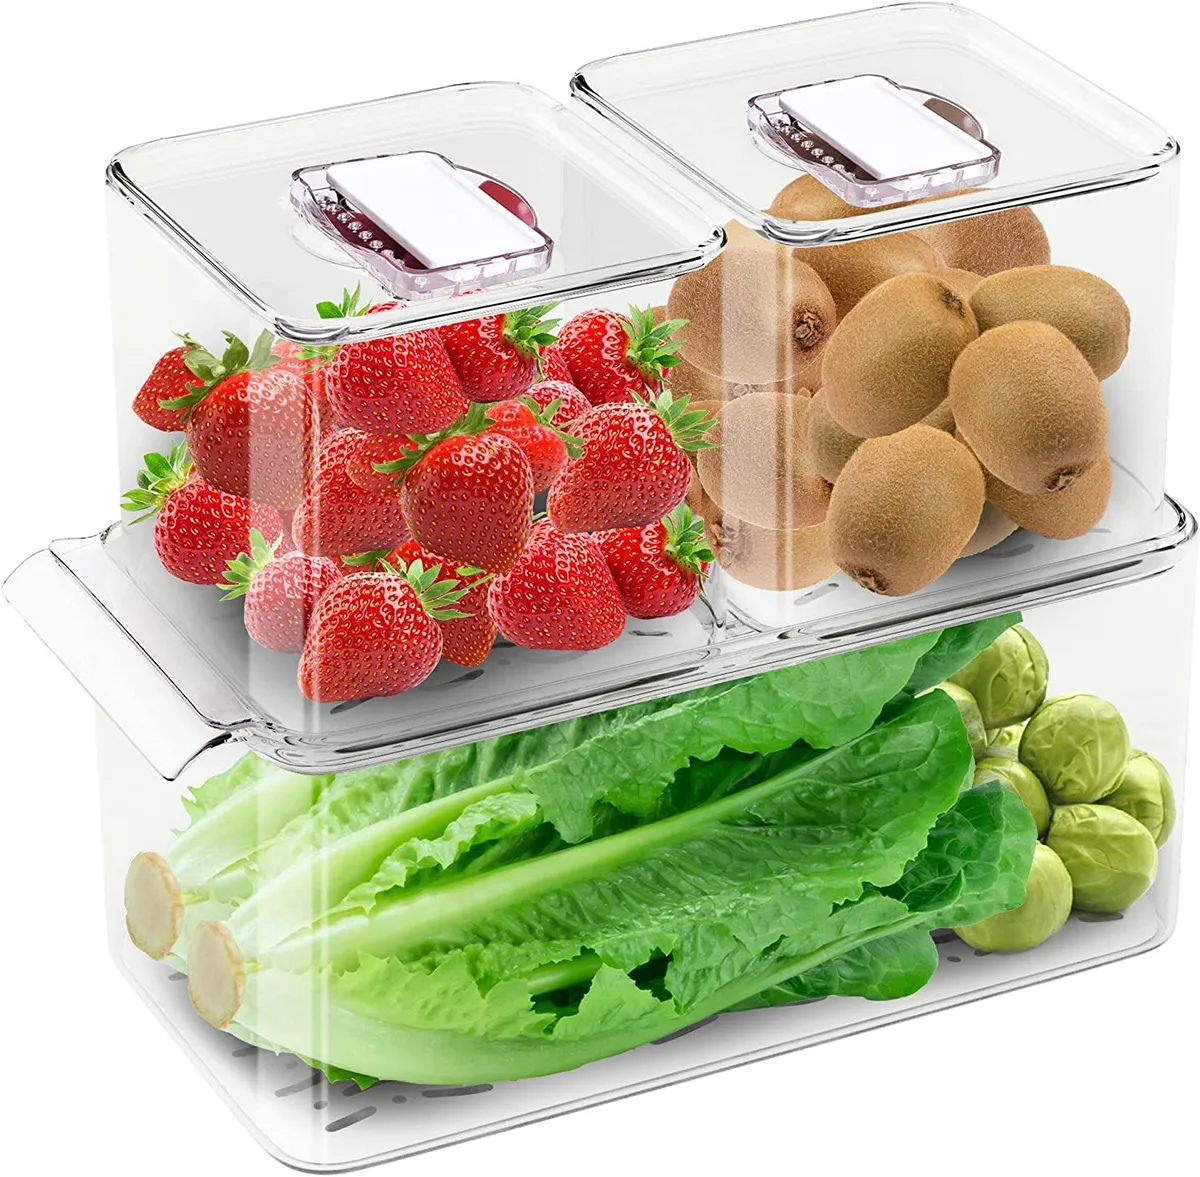 Wavelux Produce Saver Containers for Refrigerator, Food Fruit Vegetables Storage, 3 Piece Stackable Fridge Freezer Organizer, Fresh Keeper Drawer Bin